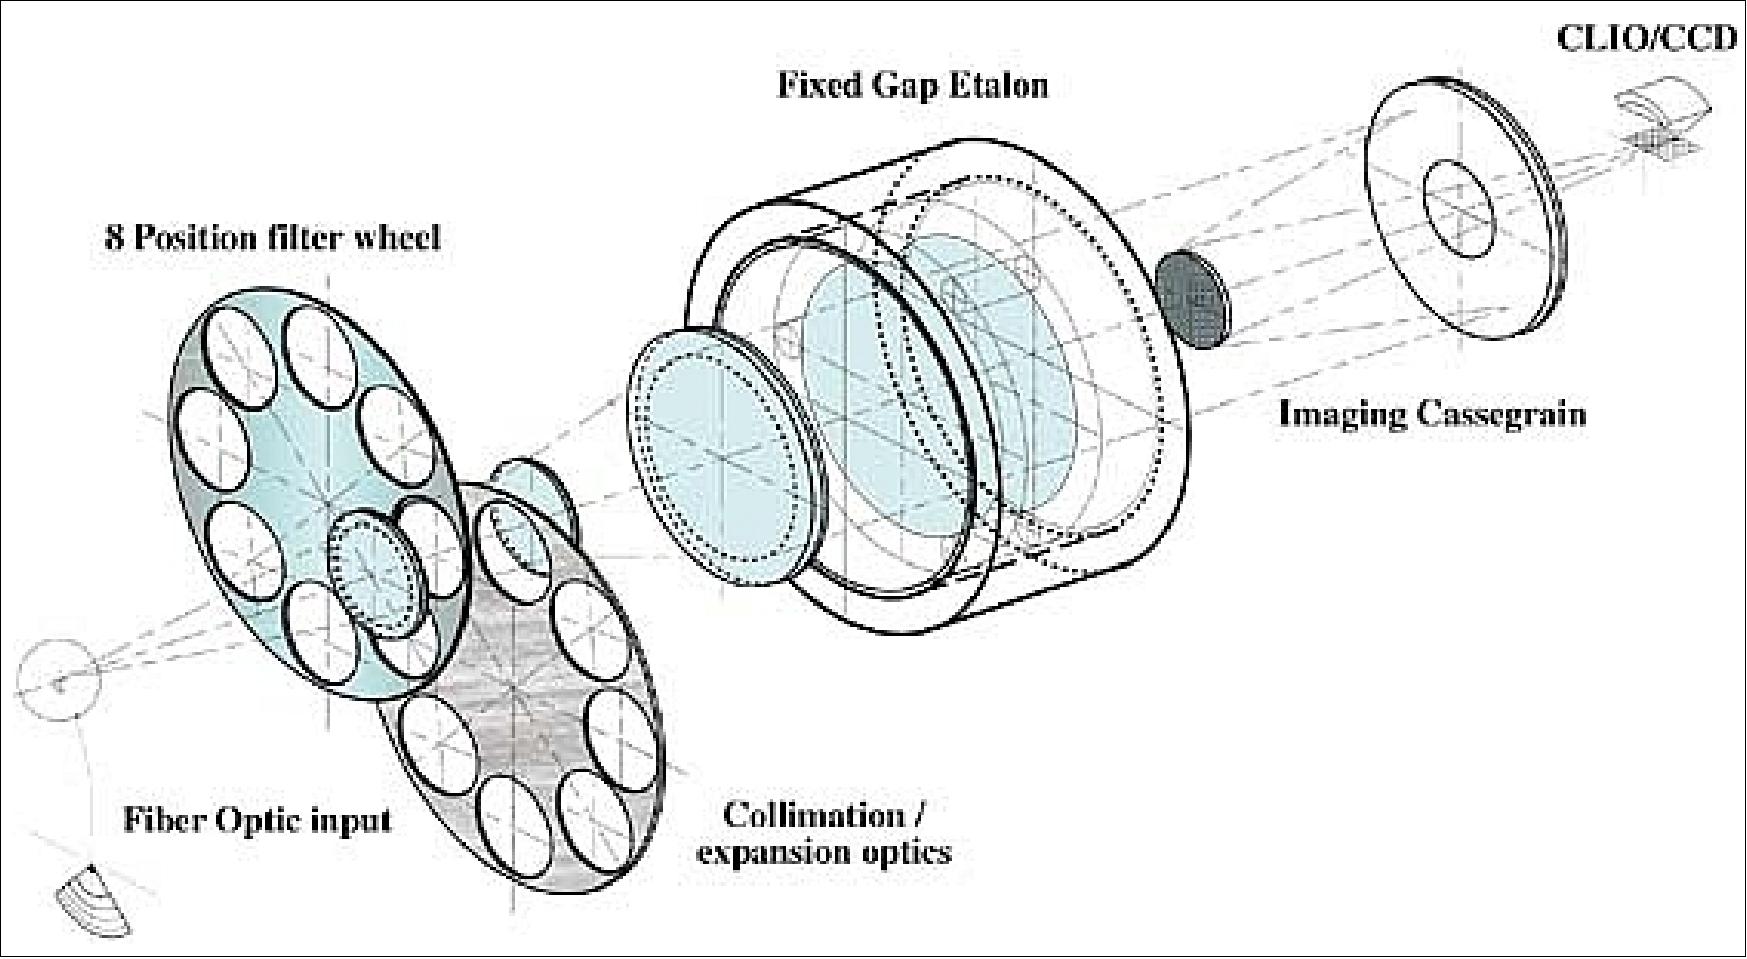 Figure 20: Schematic view of TIDI optics configuration (image credit: UCAR)